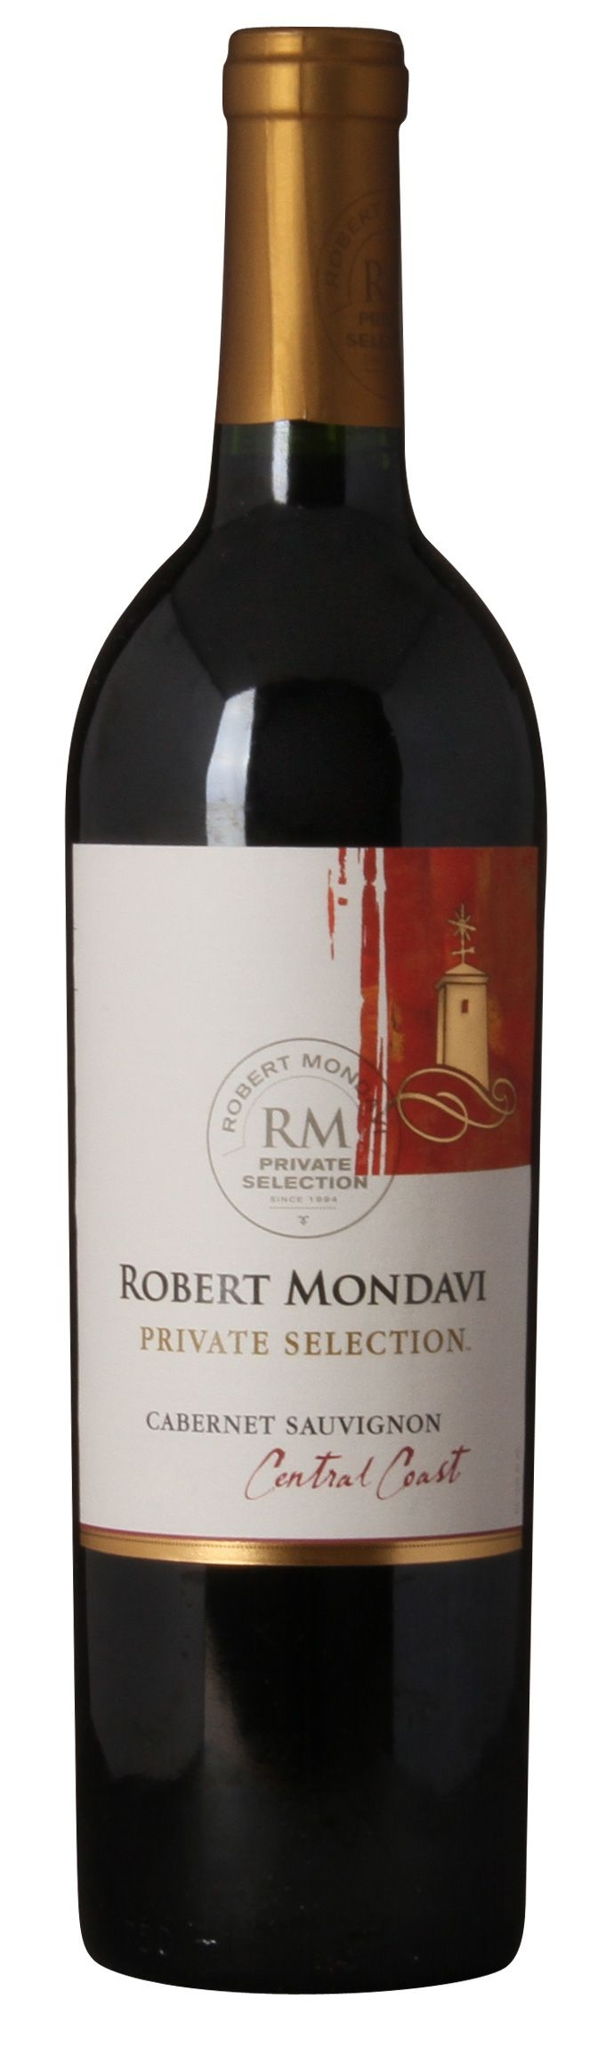 Robert-Mondavi-Private-Selection-Cabernet-Sauvignon-2011.US-CS-0086-11a-1.jpg